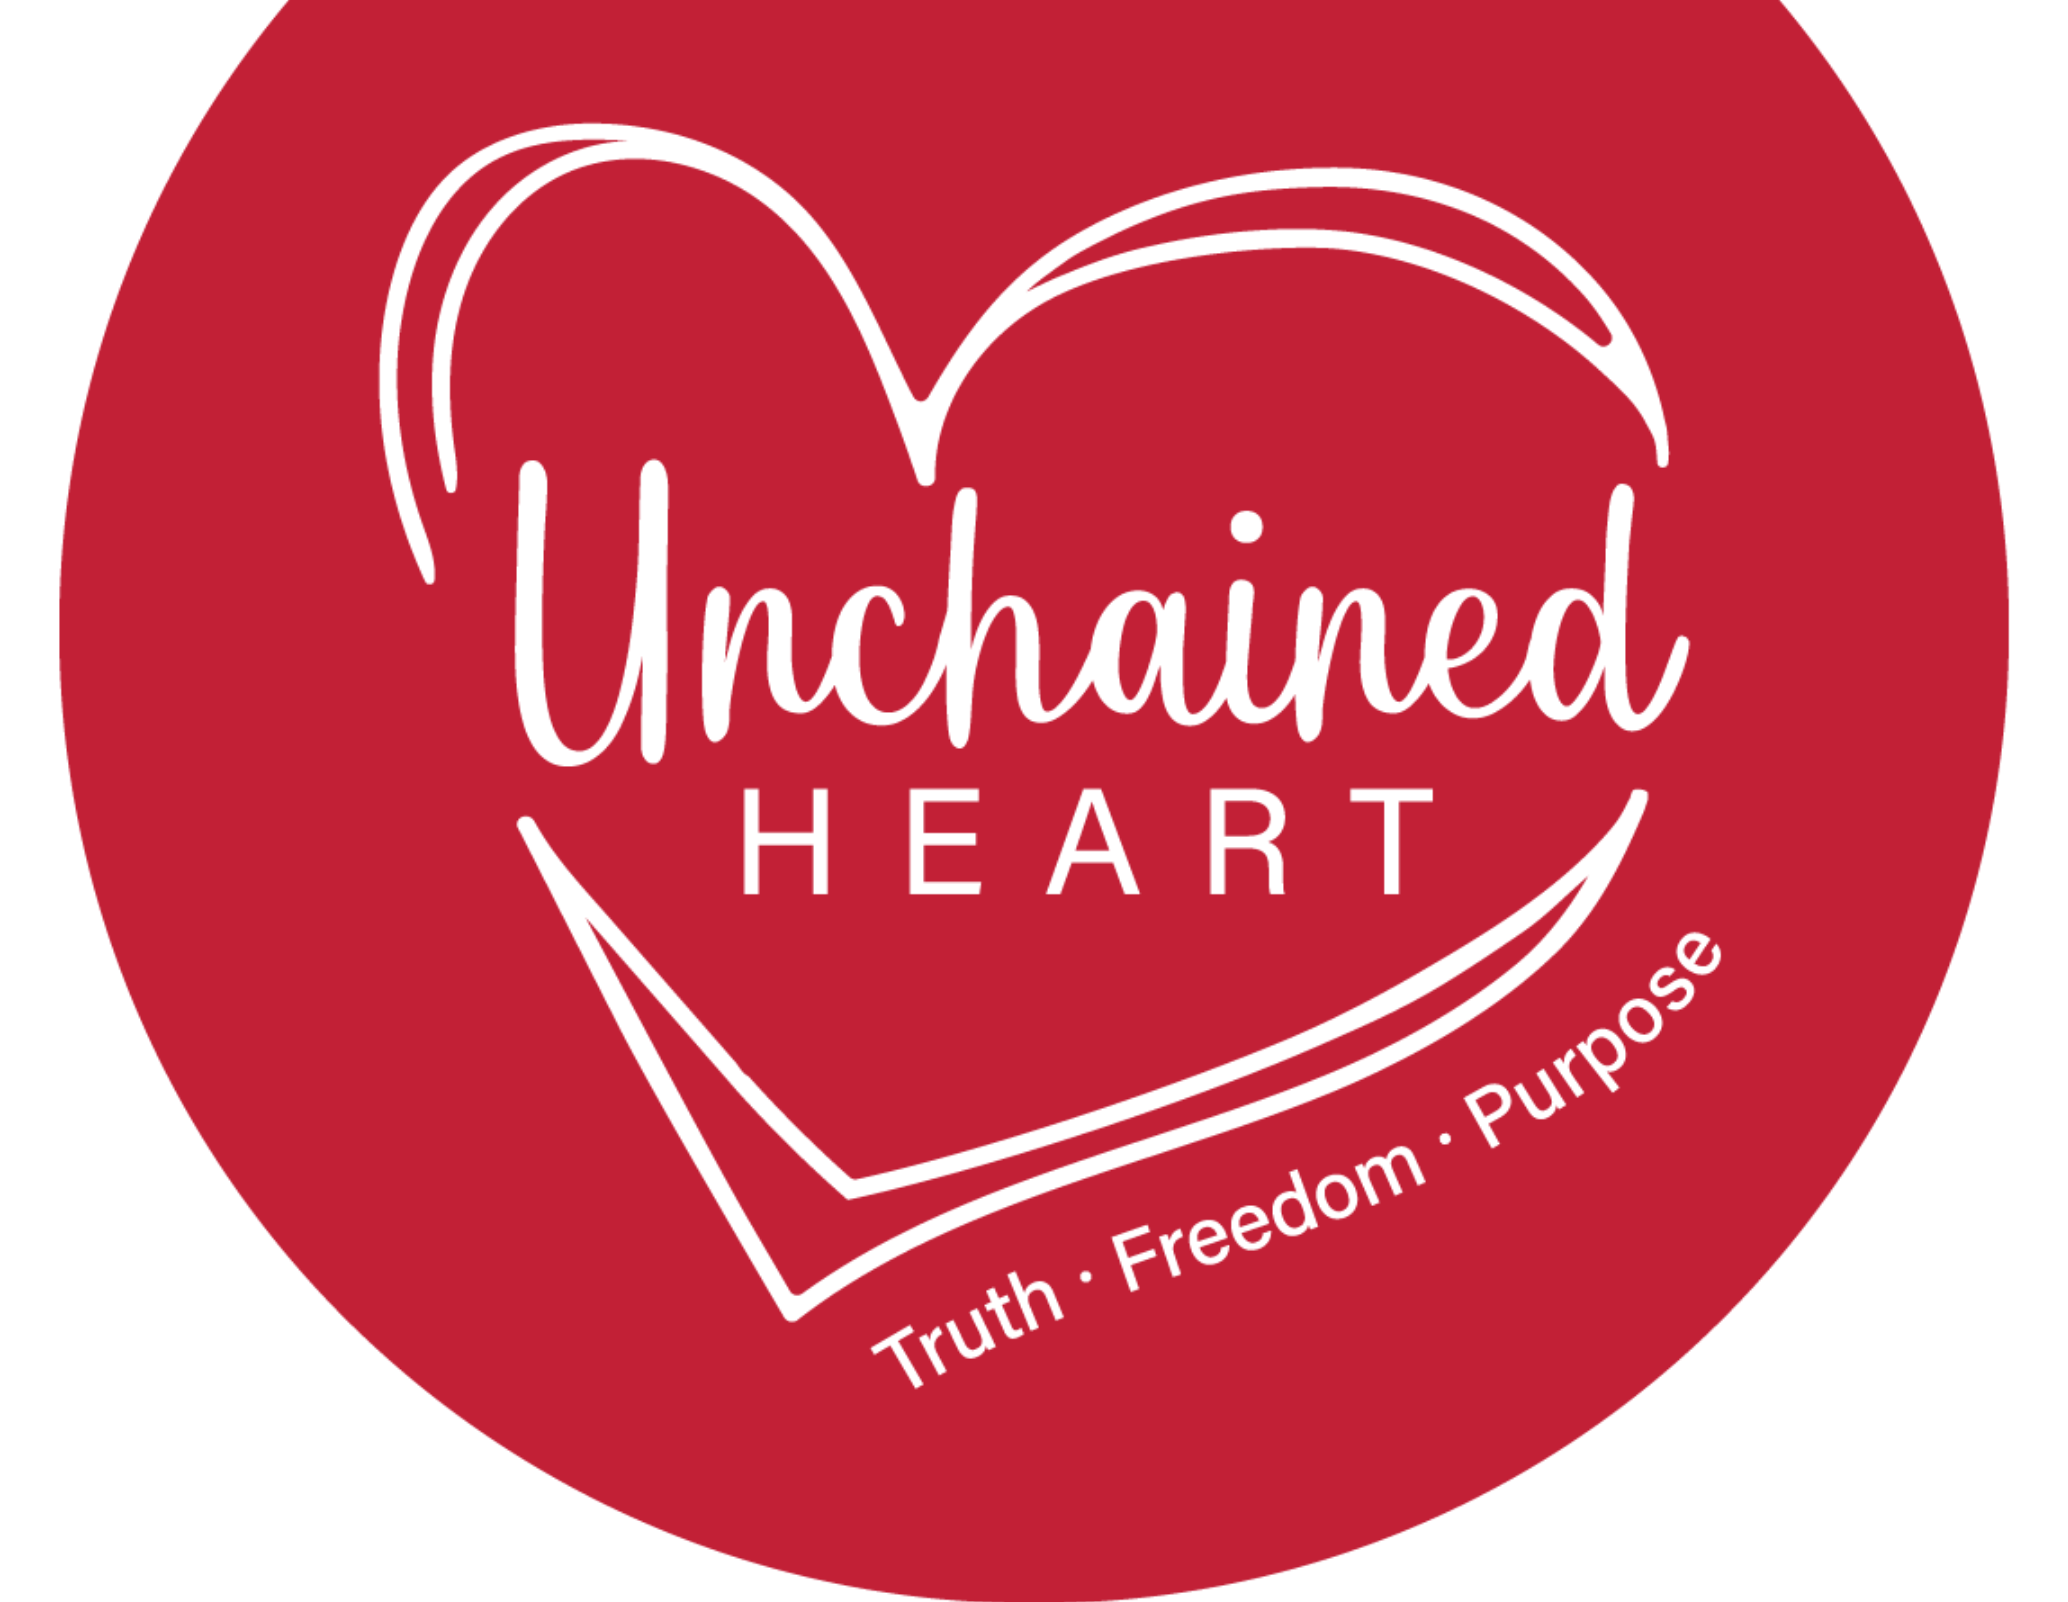 Unchained Heart menu logo